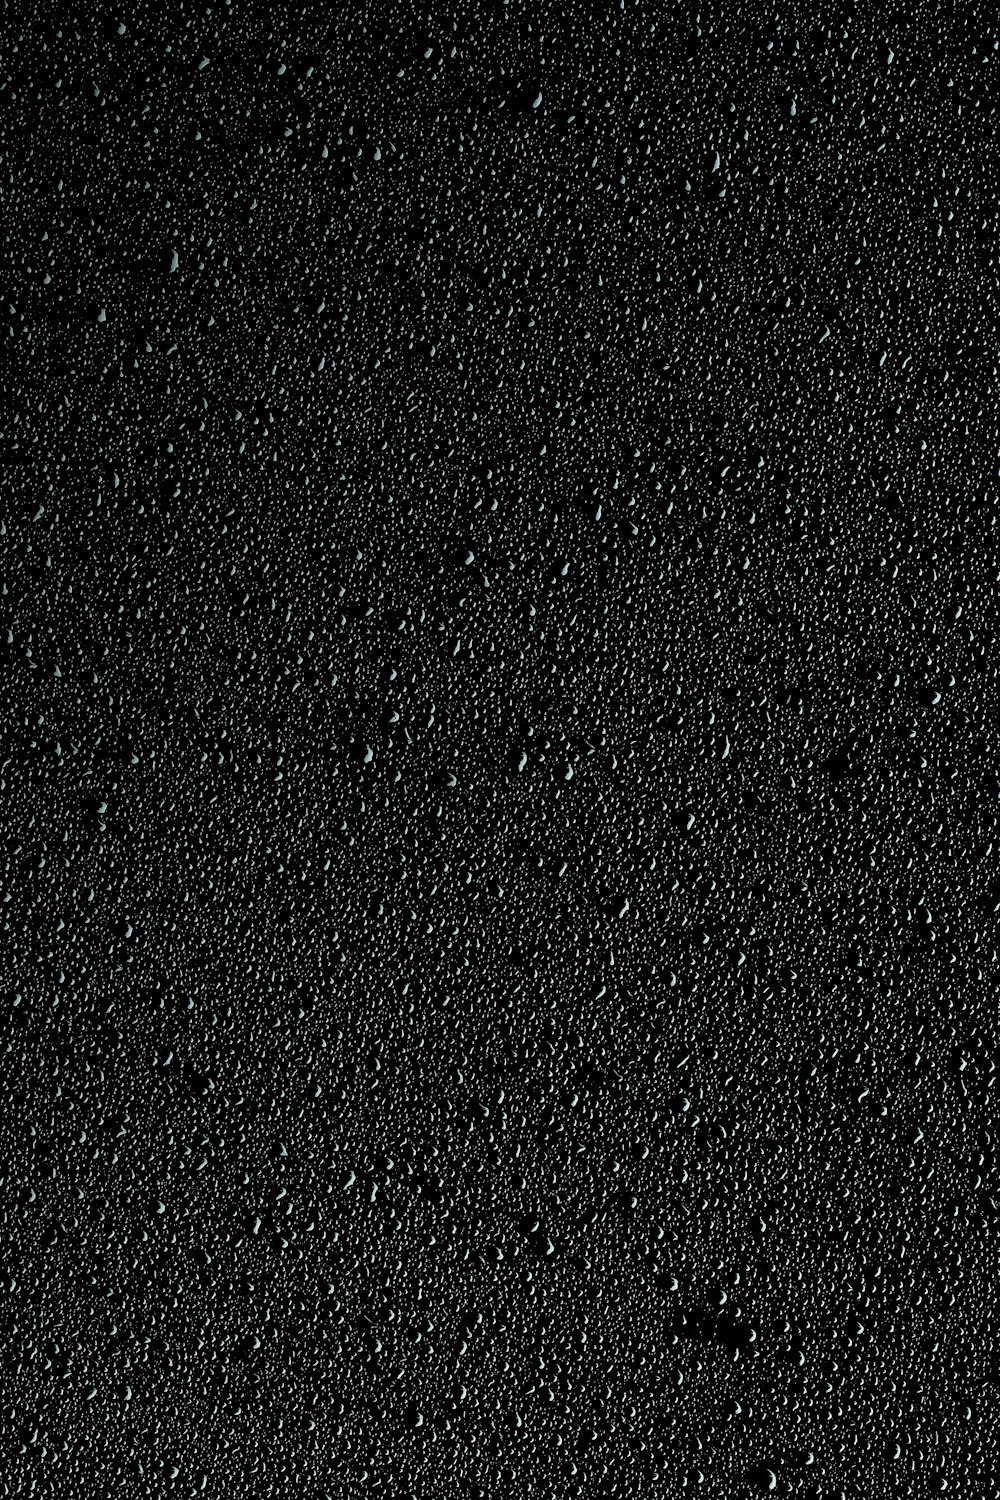 un fondo negro con pequeñas burbujas de agua